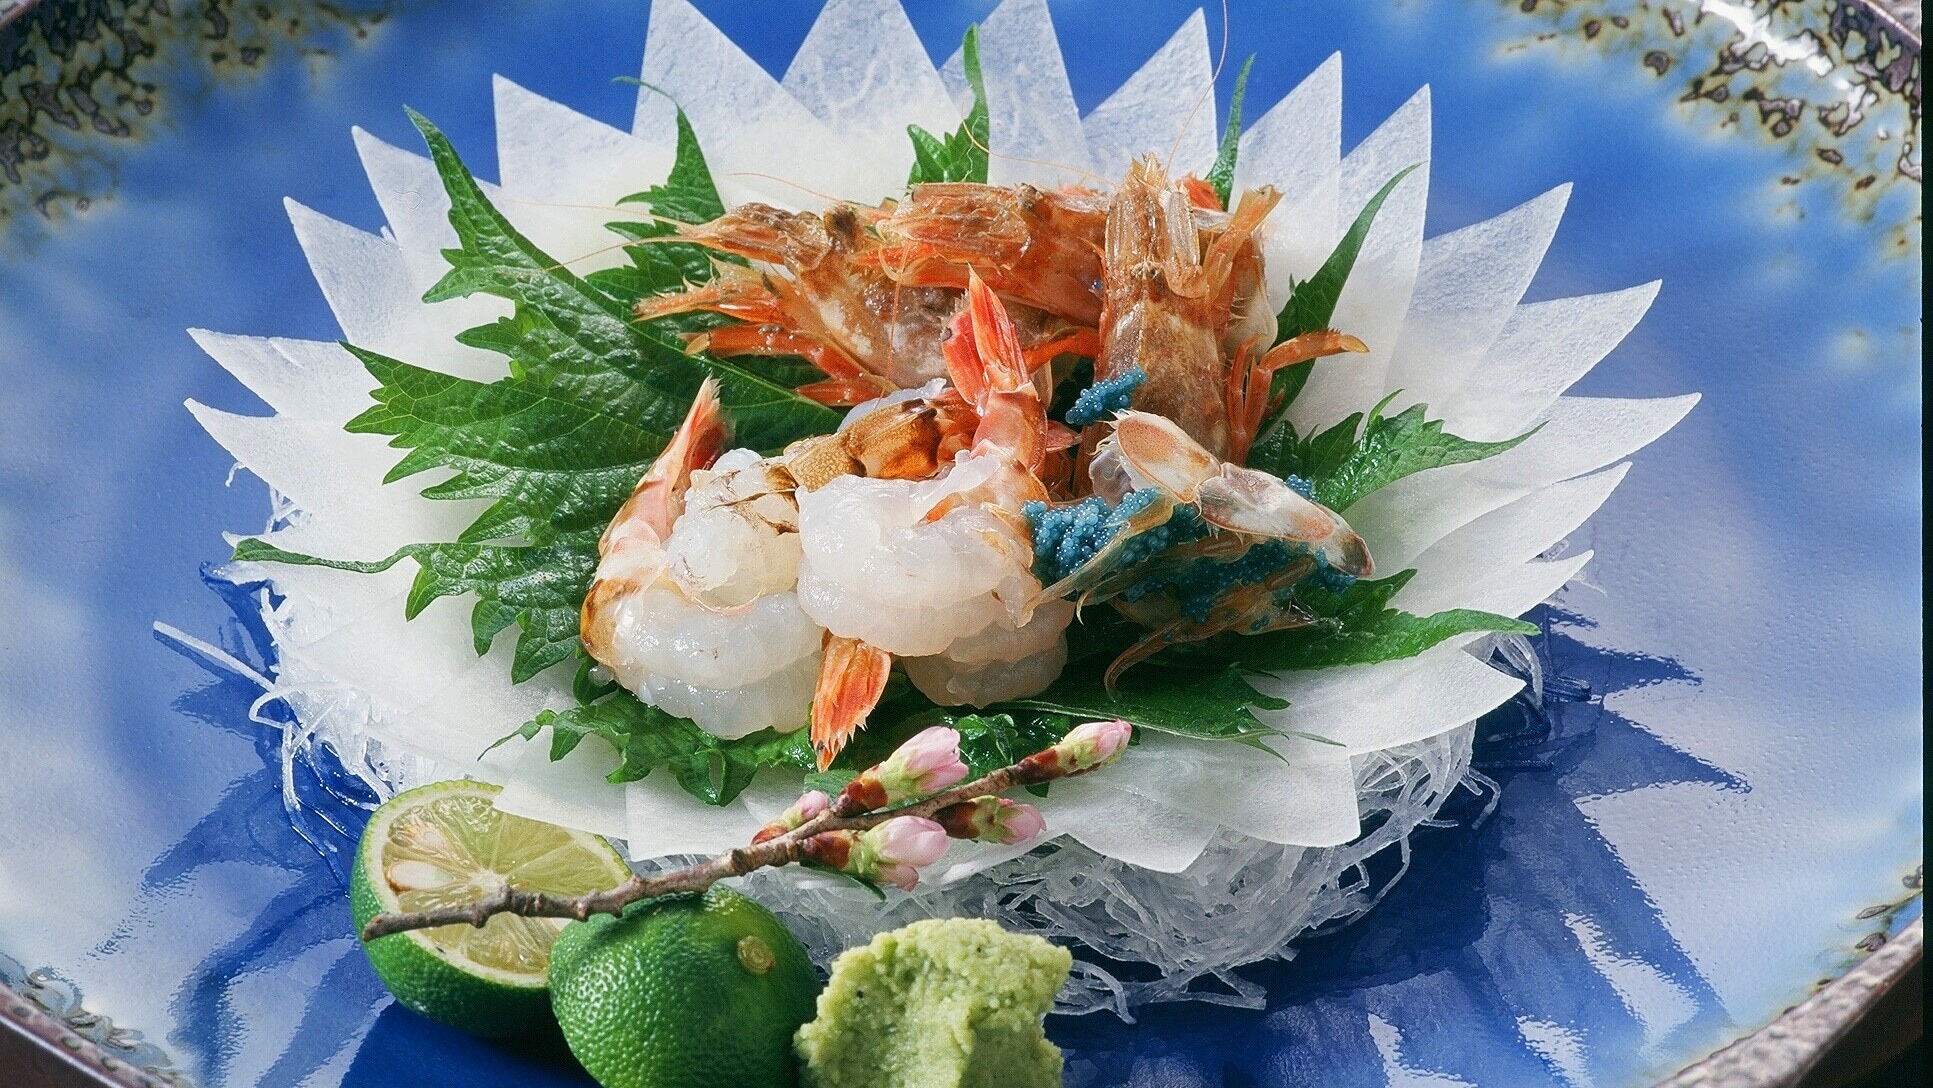 "Katsuhaku shrimp" is recommended in spring